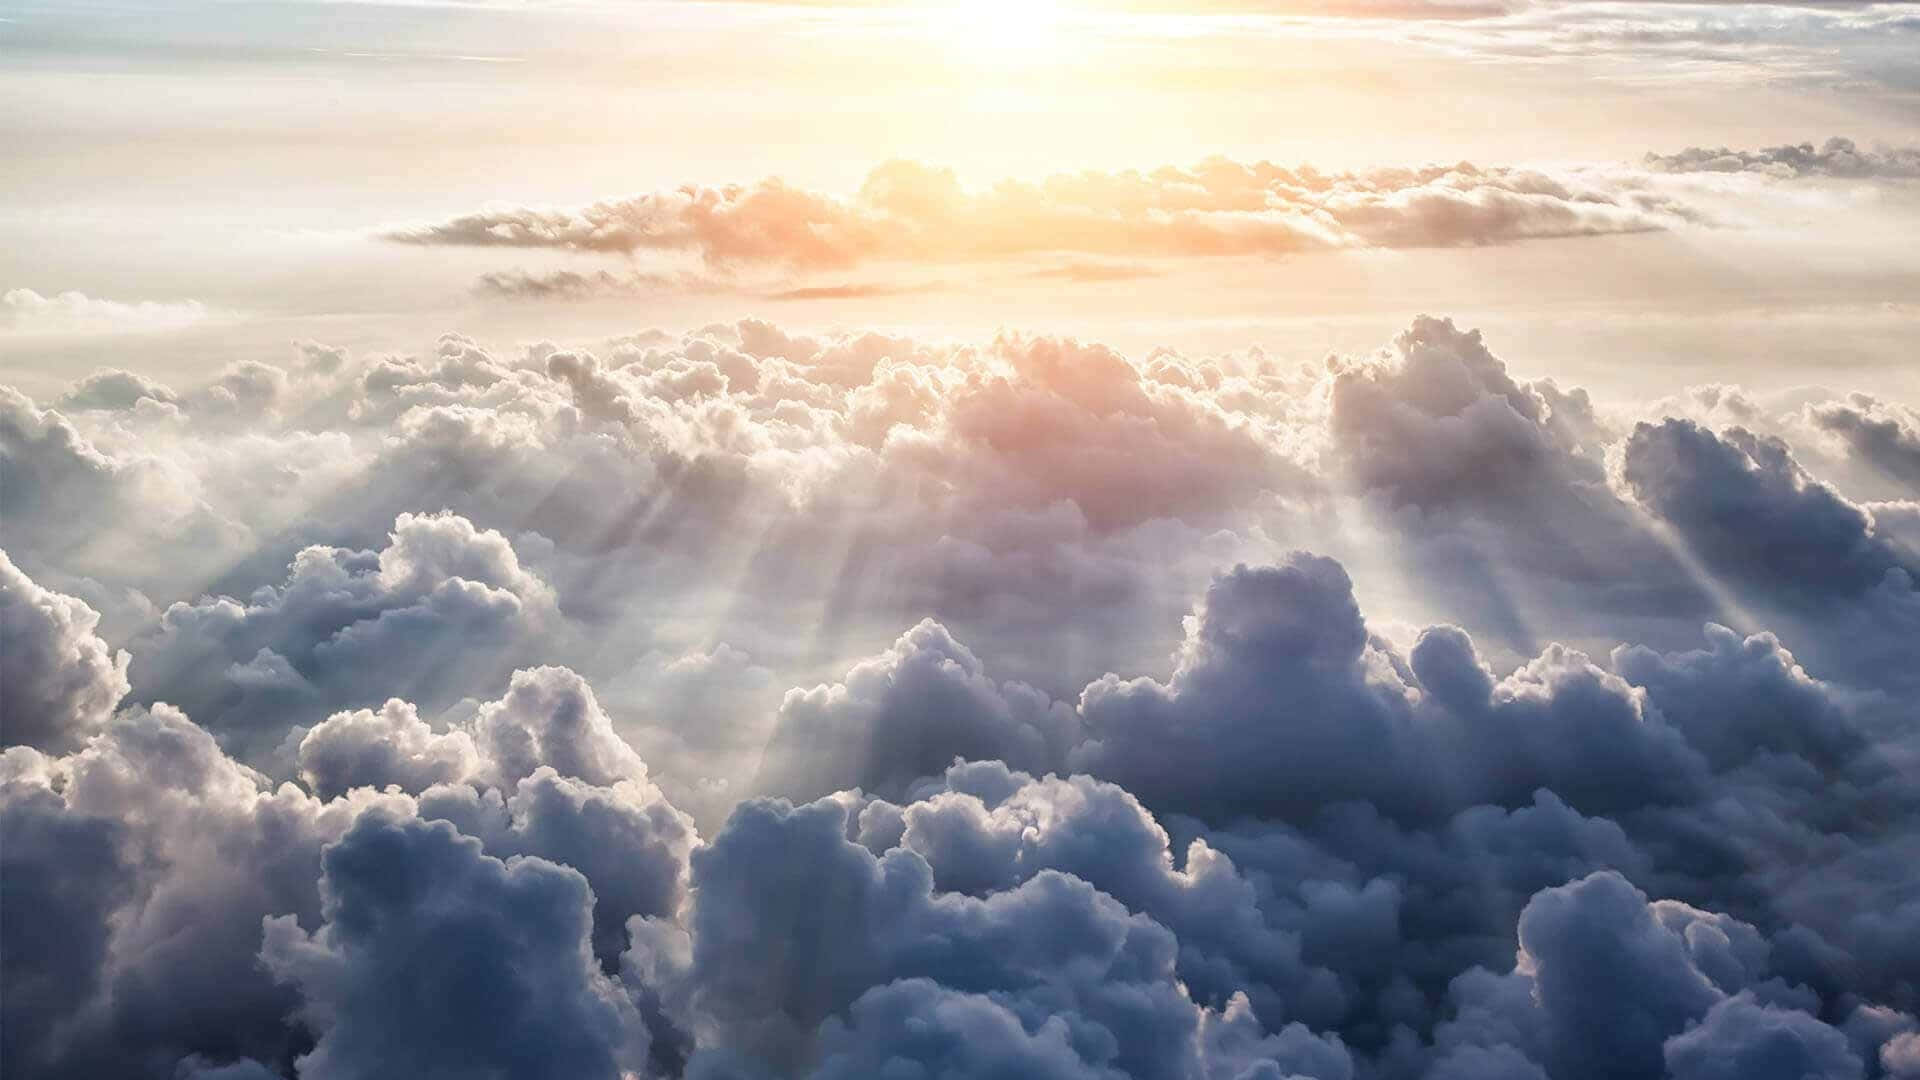 Fondode Pantalla De Capa De Nubes Del Cielo